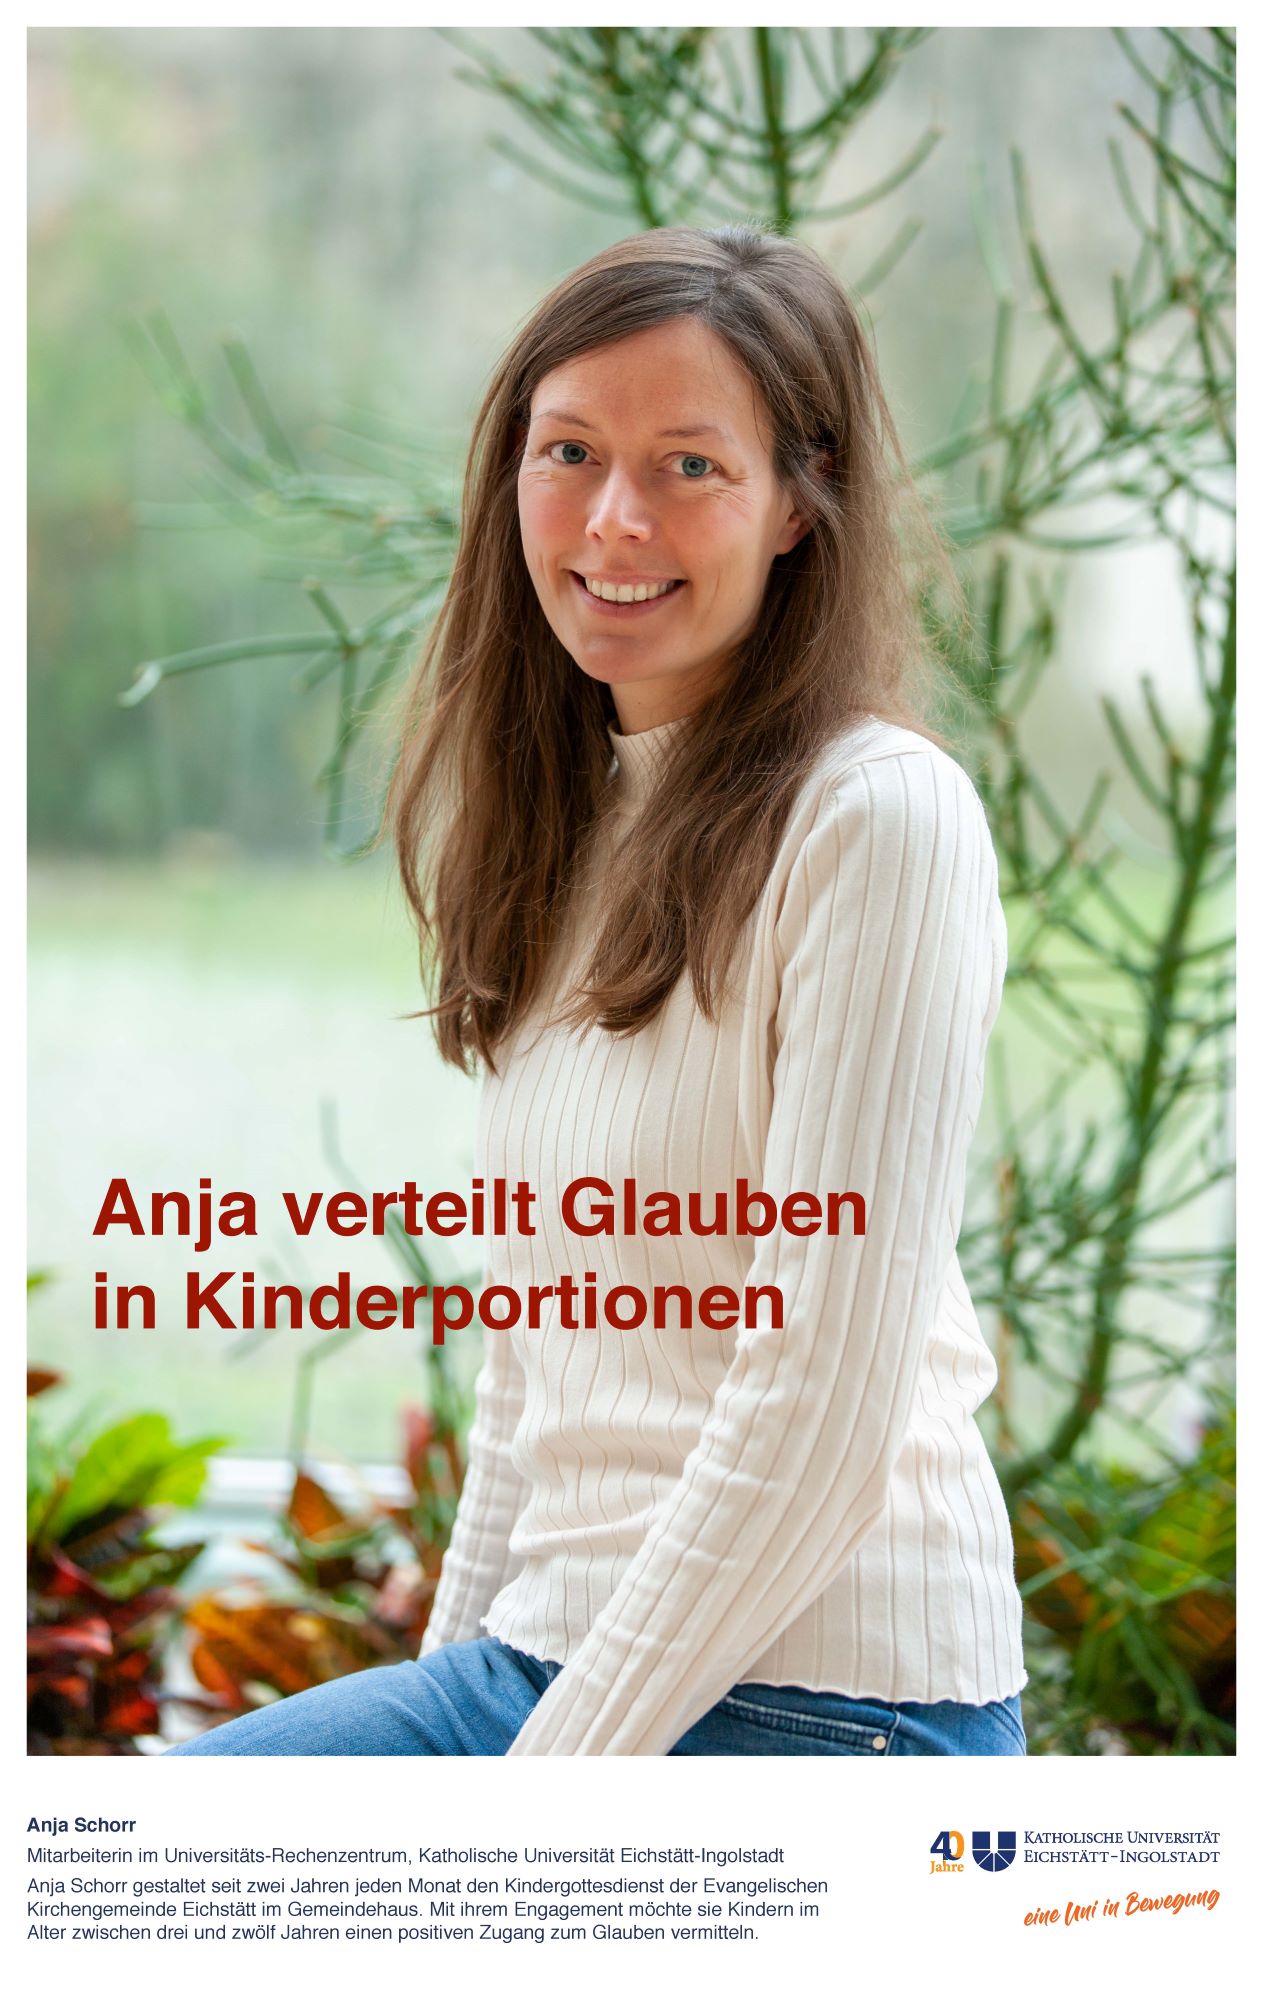 Anja Schorr